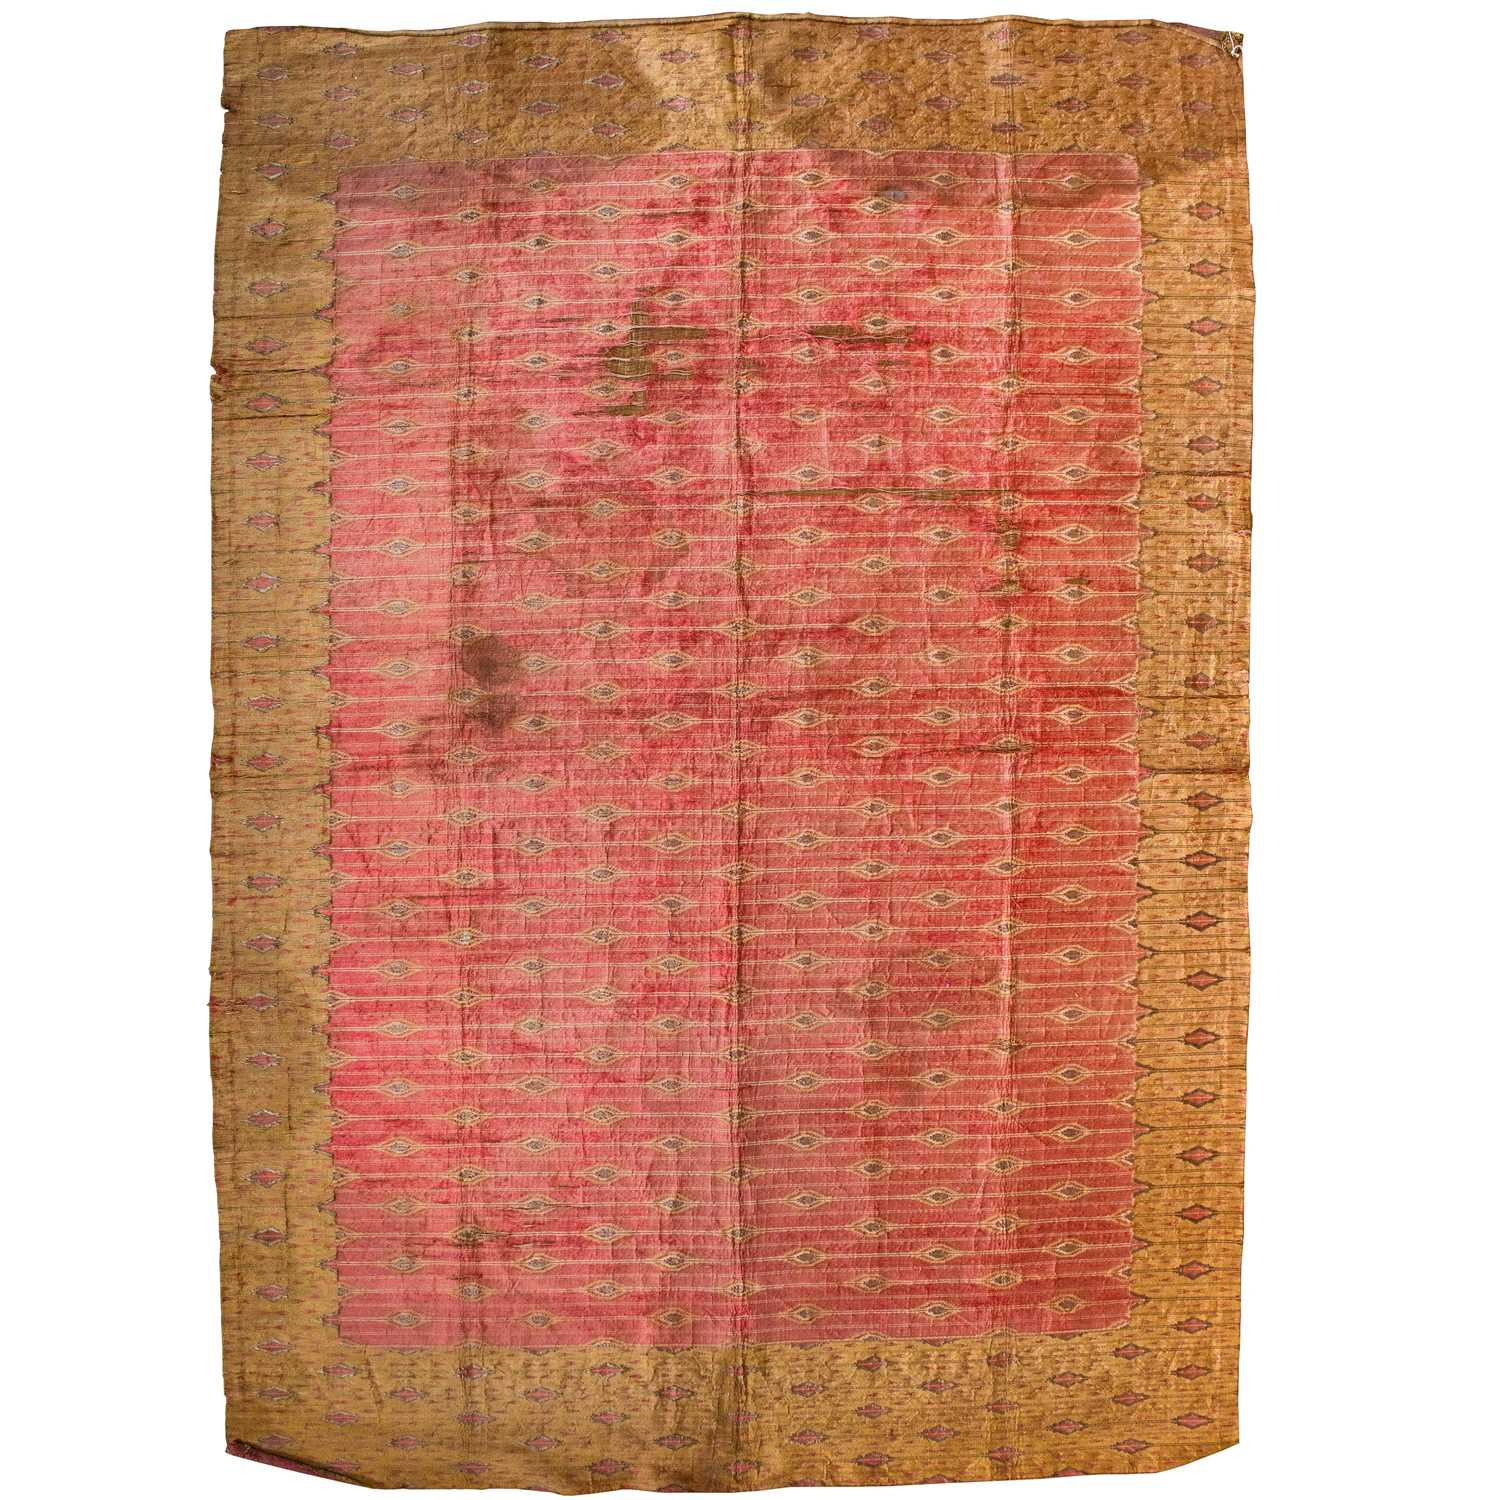 Lot 14 - A Syrian silk, metal thread and wool brocade, Ottoman period, circa 1800.